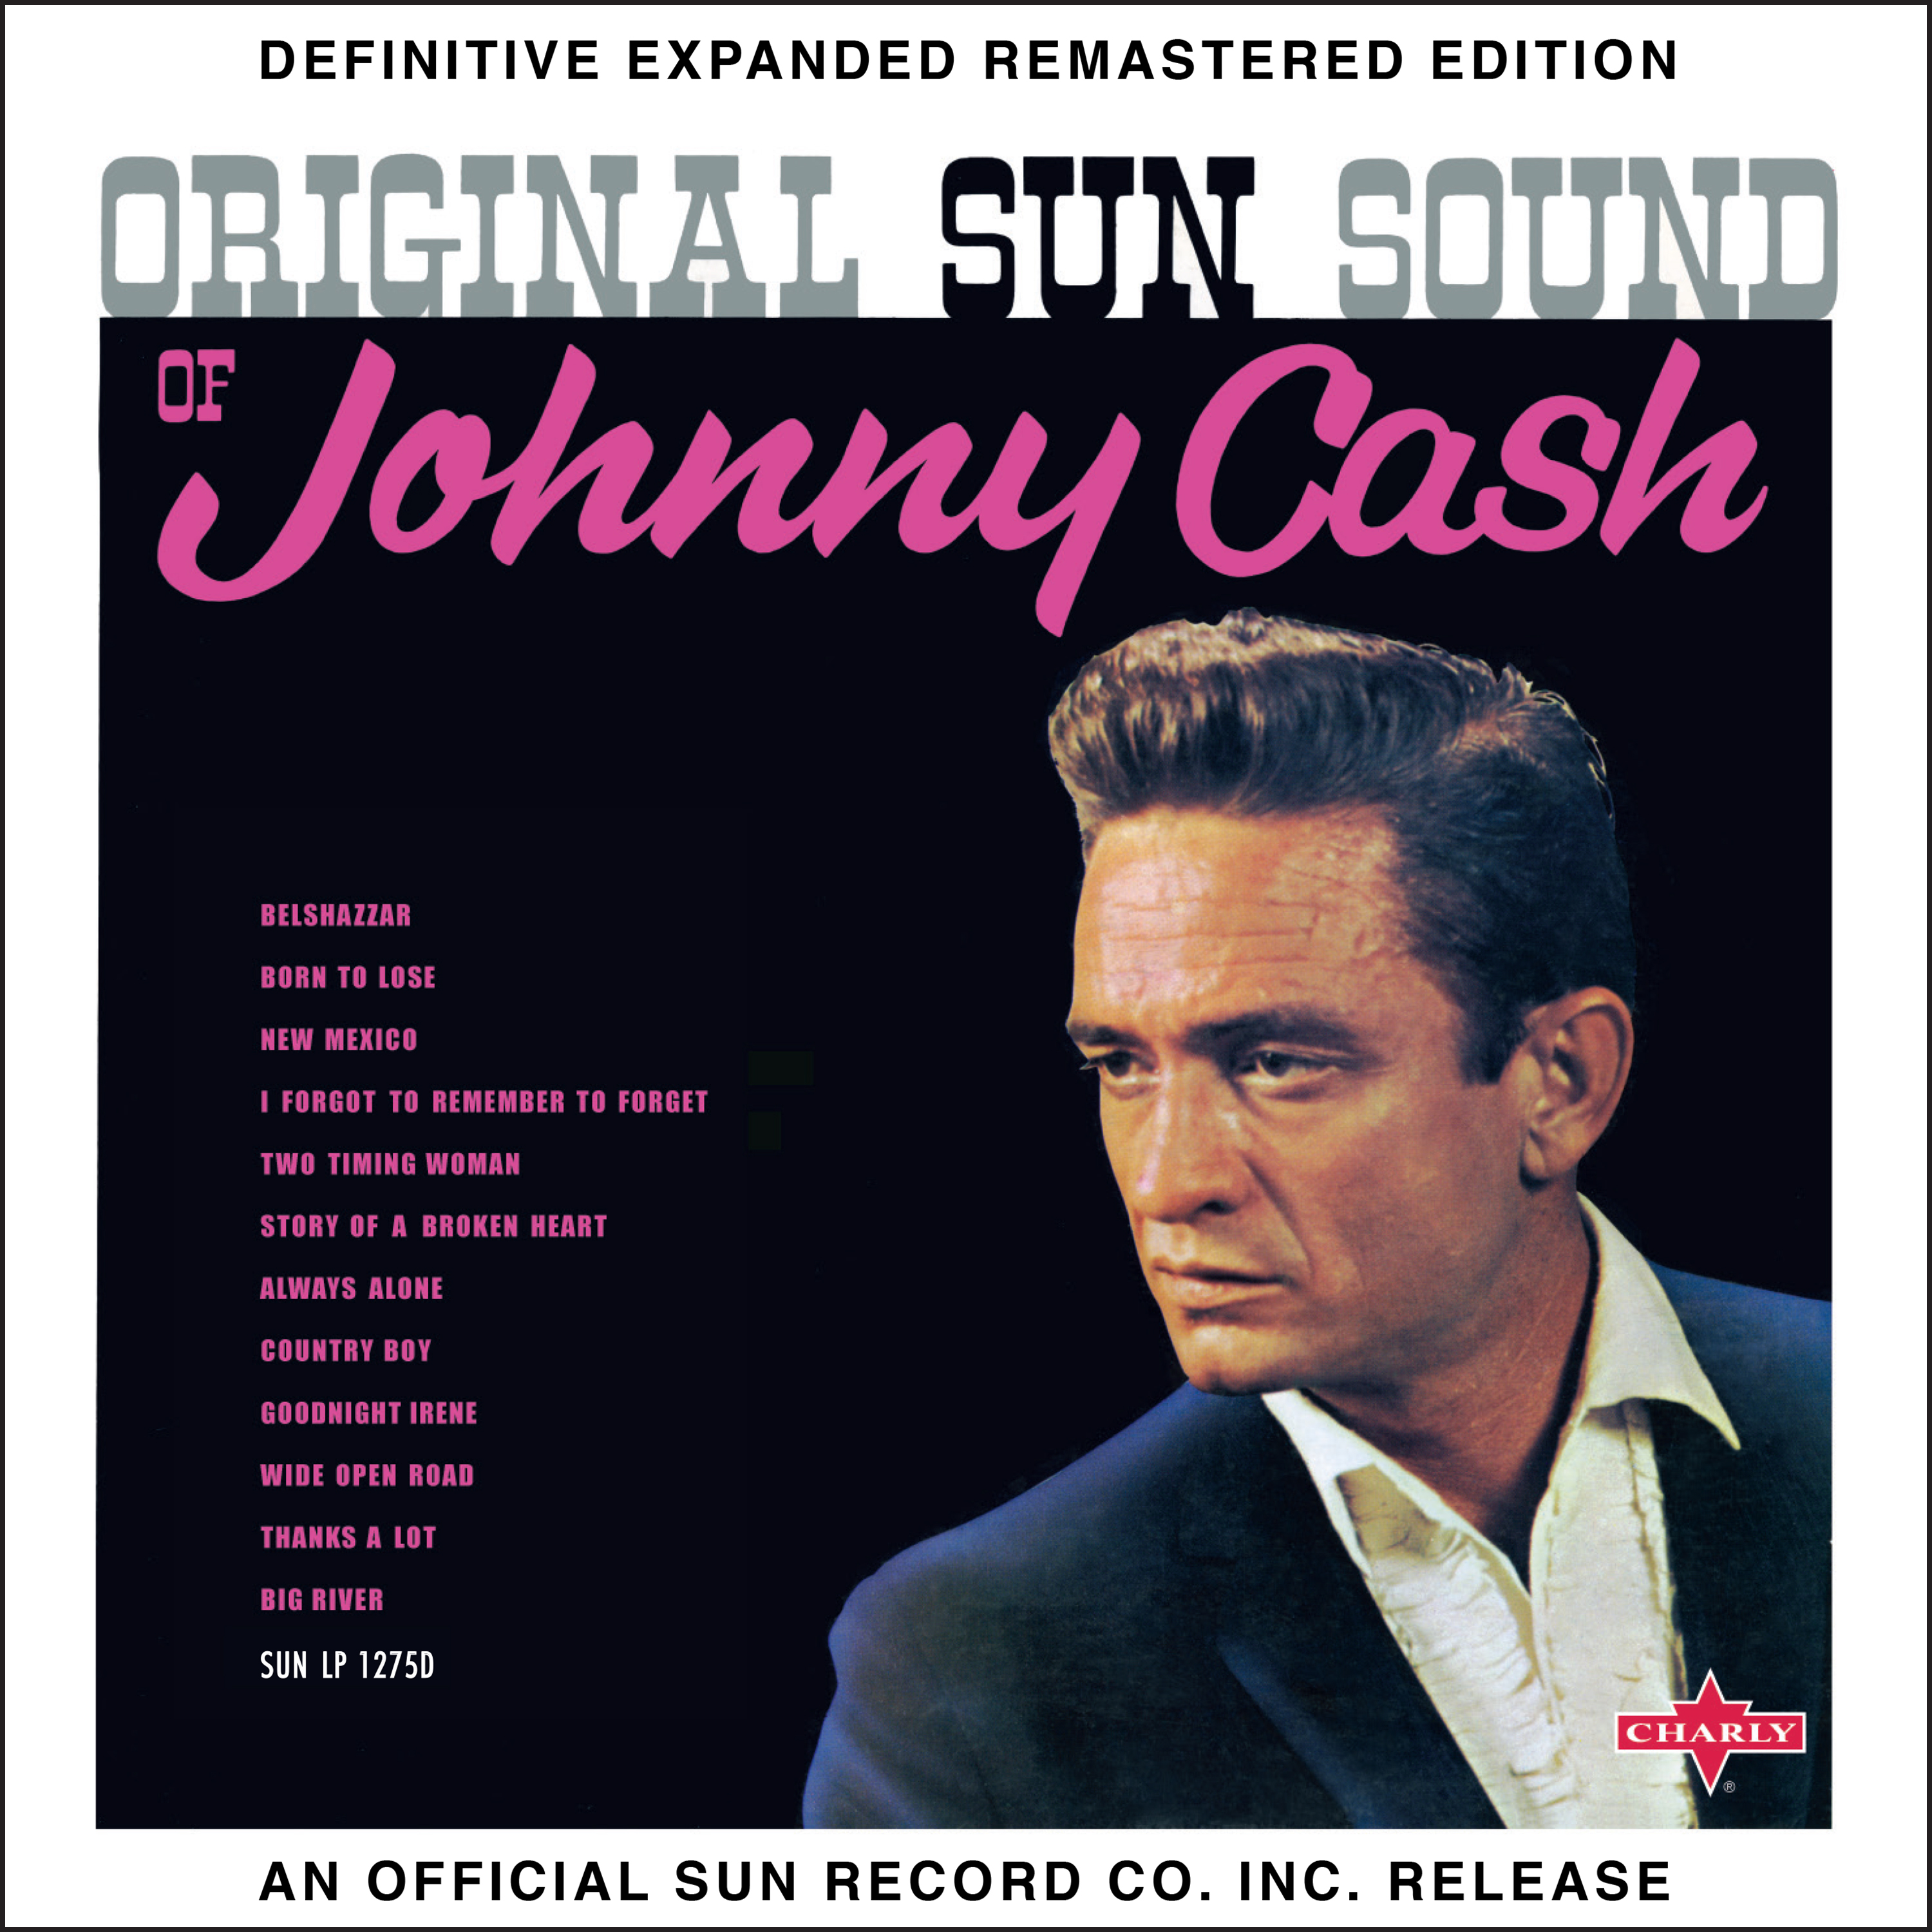 Original Sun Sound of Johnny Cash (2017 Definitive Expanded Remastered Edition)